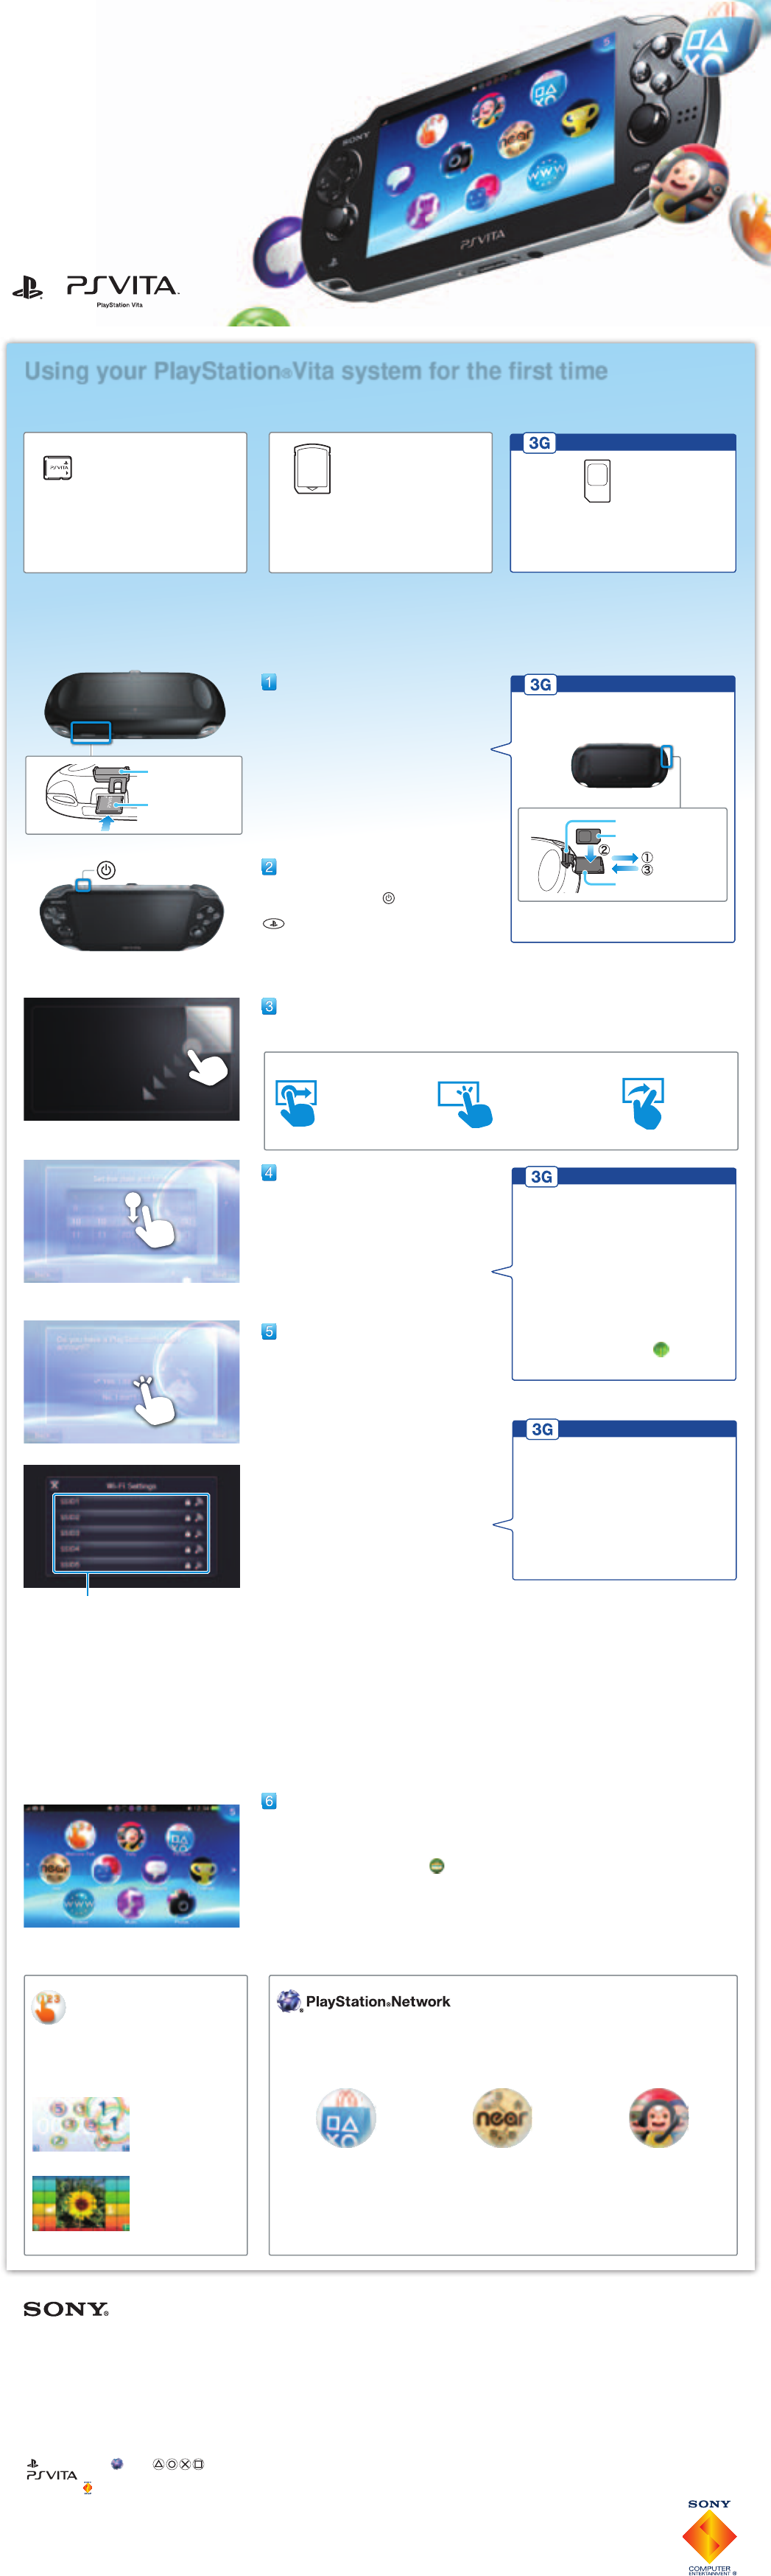 Manual Sony PlayStation Vita PCH-1103 (page 1 of 2) (English)